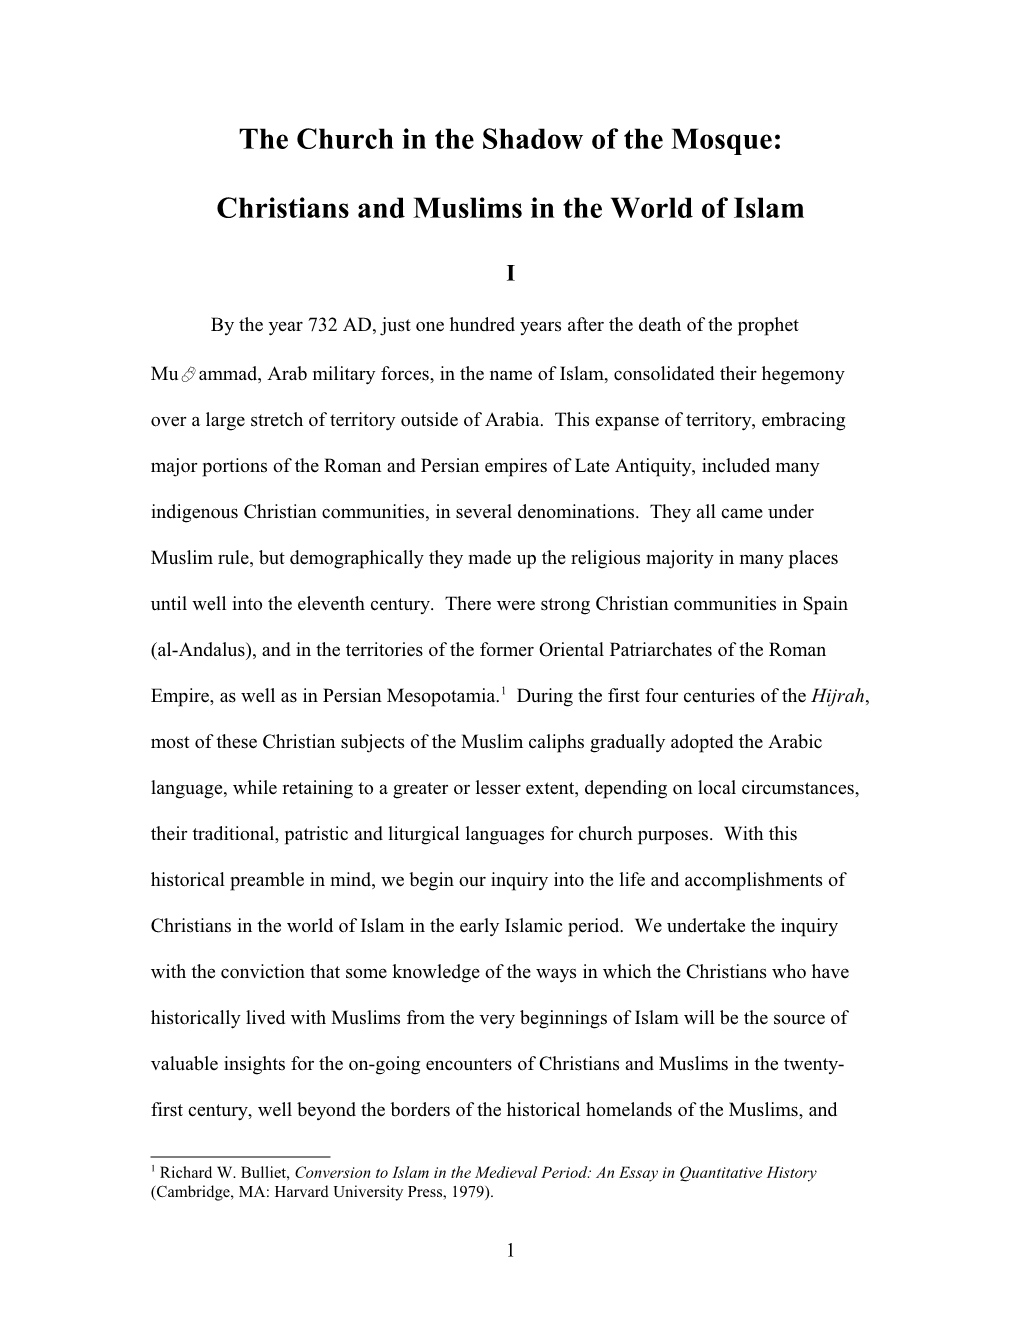 Christians Under Muslim Rule